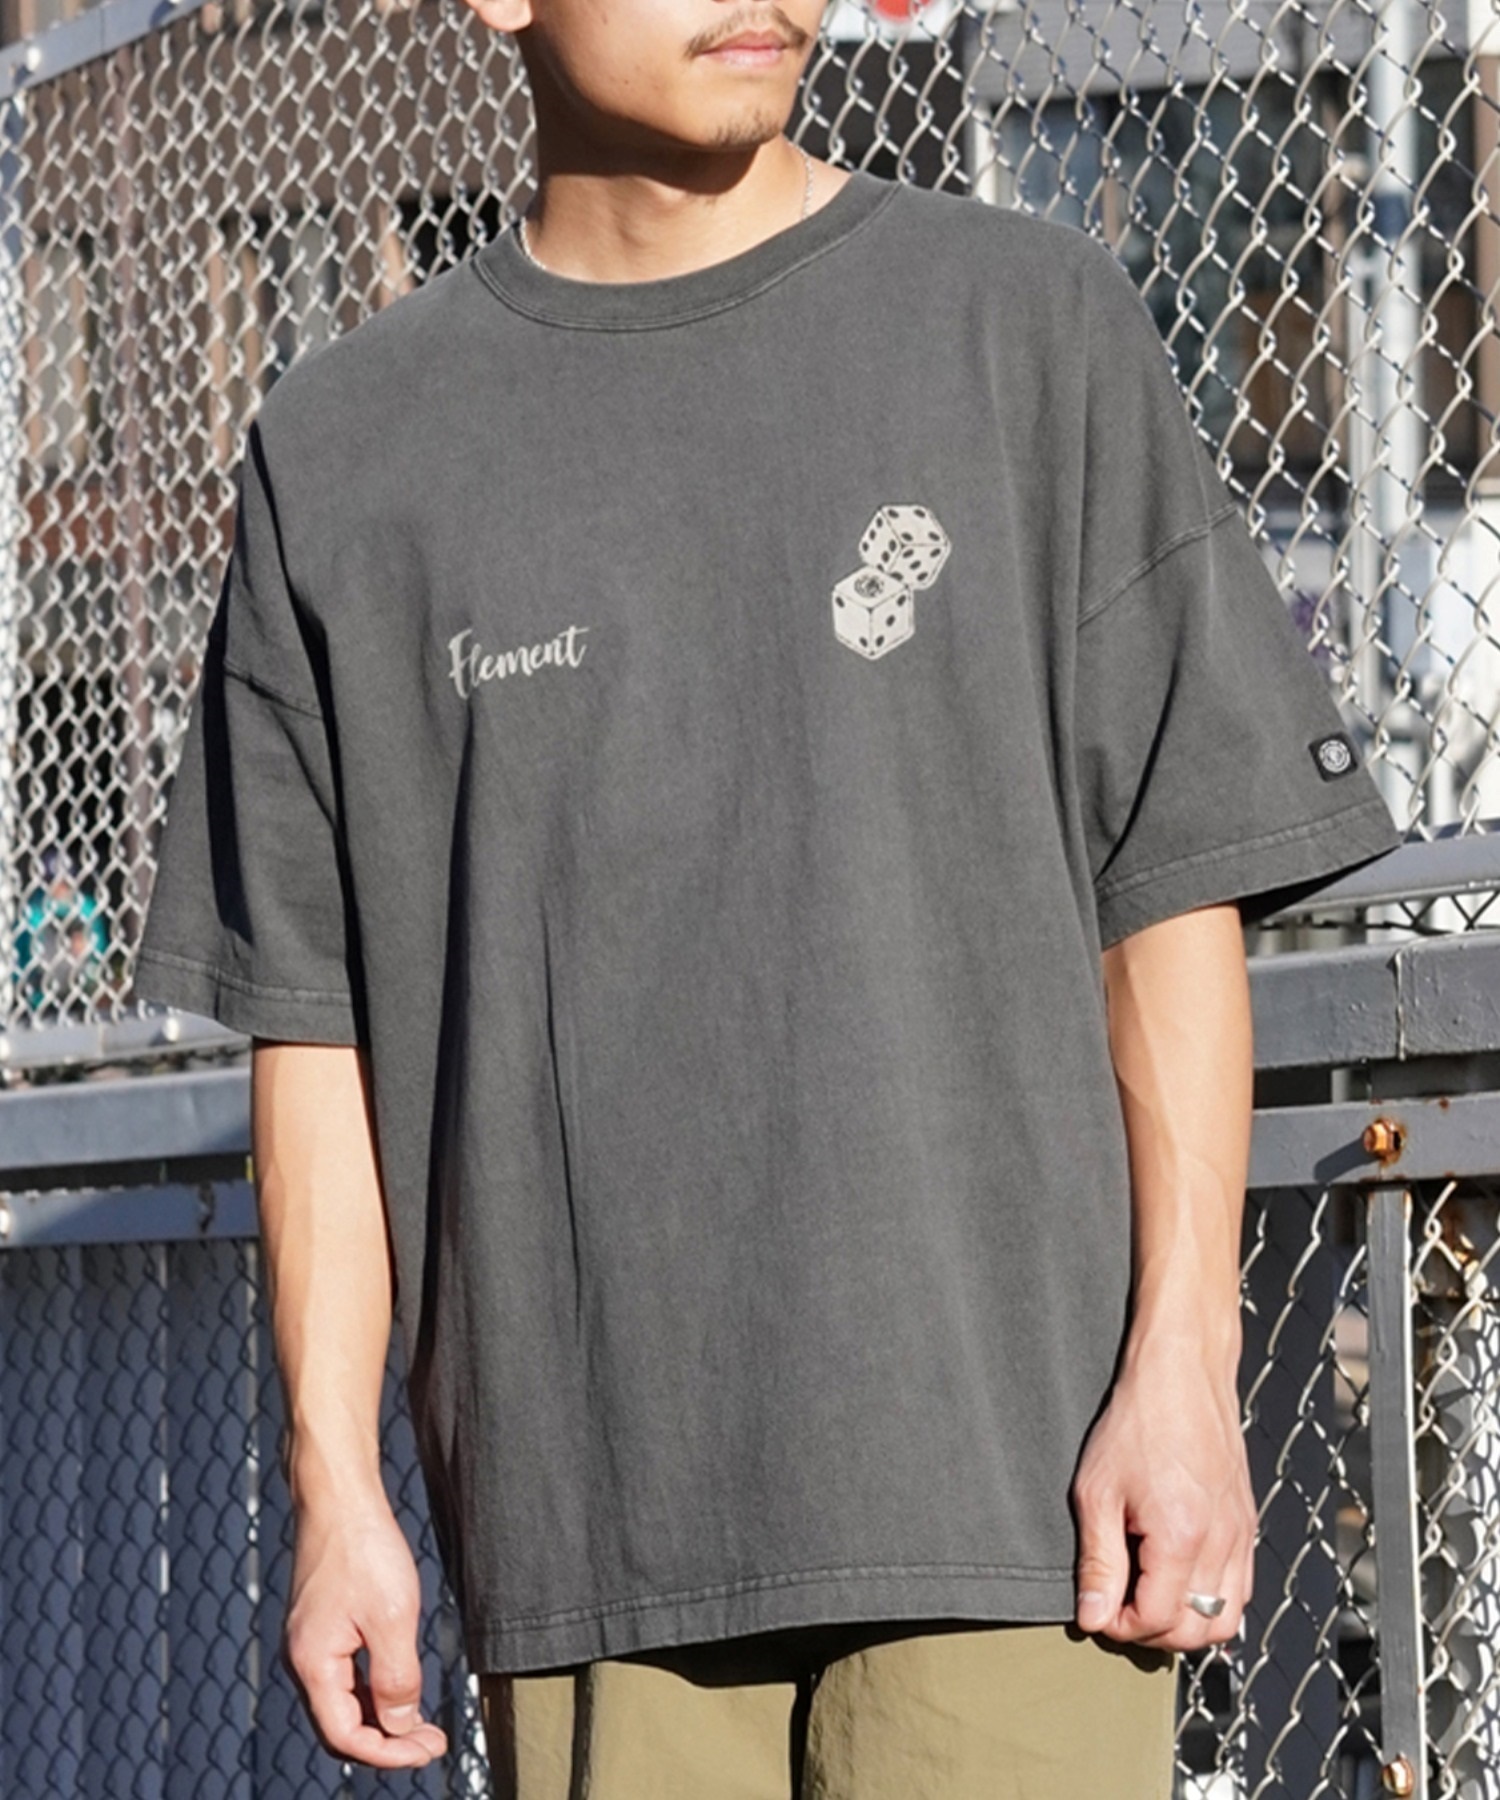 ELEMENT エレメント メンズ 半袖 Tシャツ オーバーサイズ ダイスロゴ バックプリント サイコロモチーフ ヴィンテージ風 かすれプリント BE021-252(ORG-M)